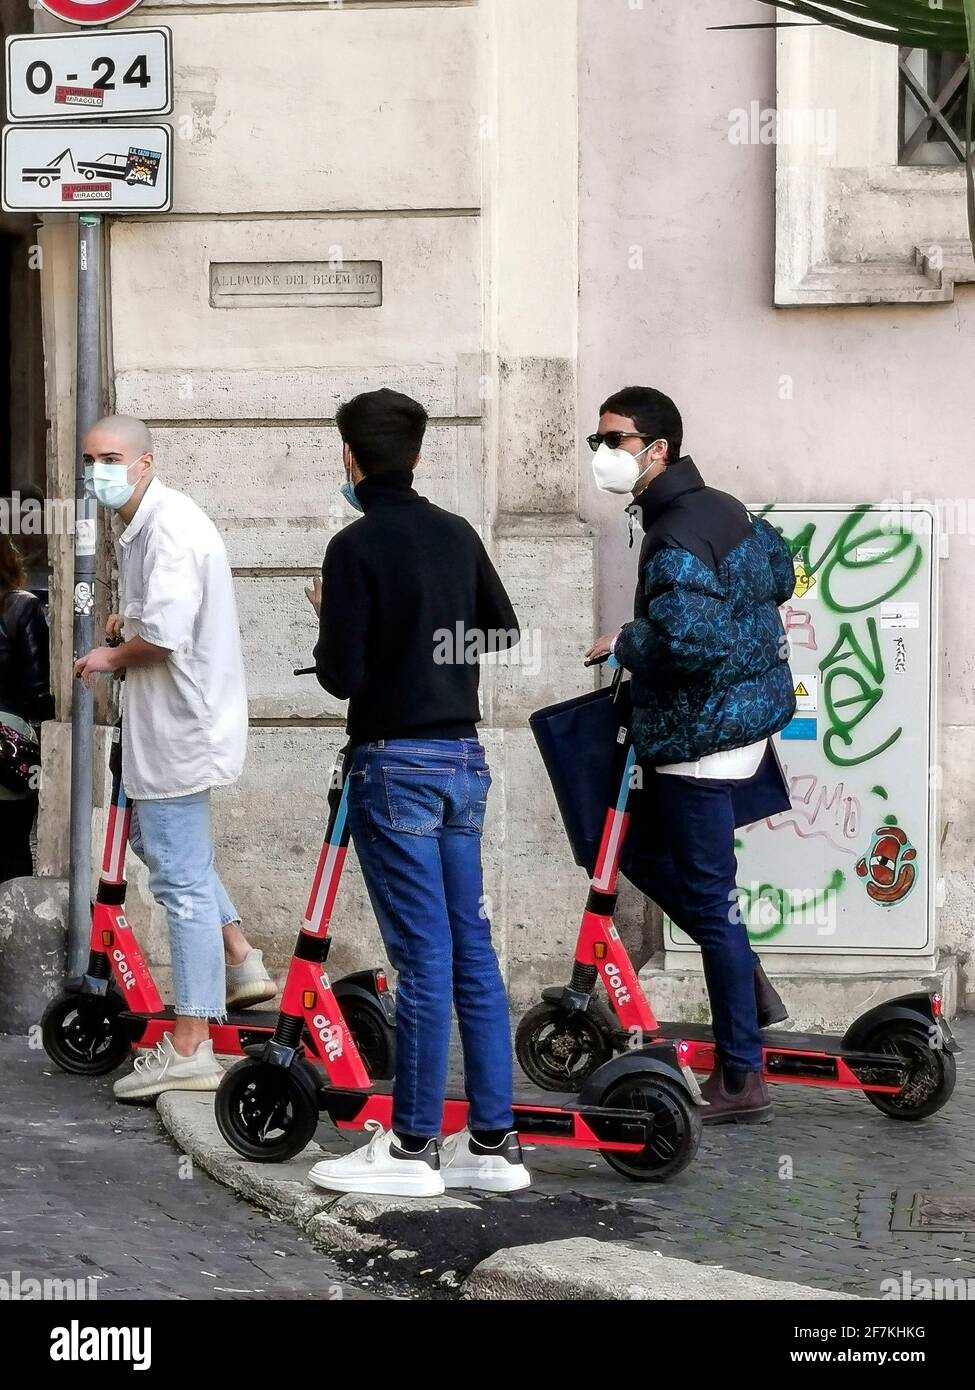 Italy, Rome, March 13, 2021 : People riding an electric  scooter across Rome   Photo © Fabio Mazzarella/Sintesi/Alamy Stock Photo Stock Photo